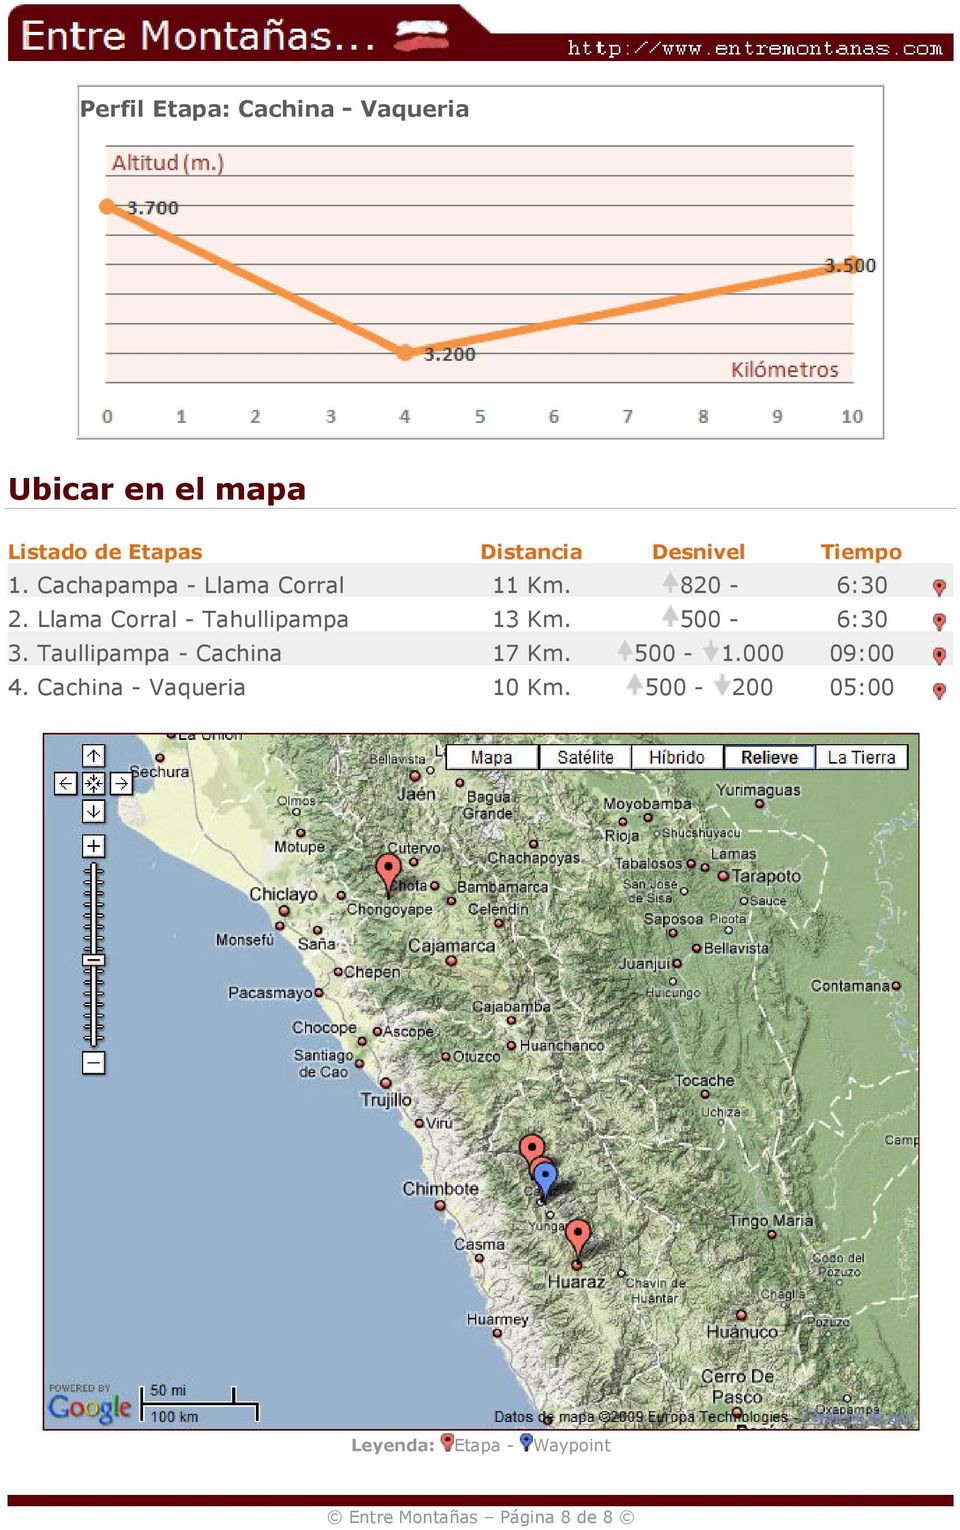 Llama Corral - Tahullipampa 13 Km. 500-6:30 3. Taullipampa - Cachina 17 Km. 500-1.